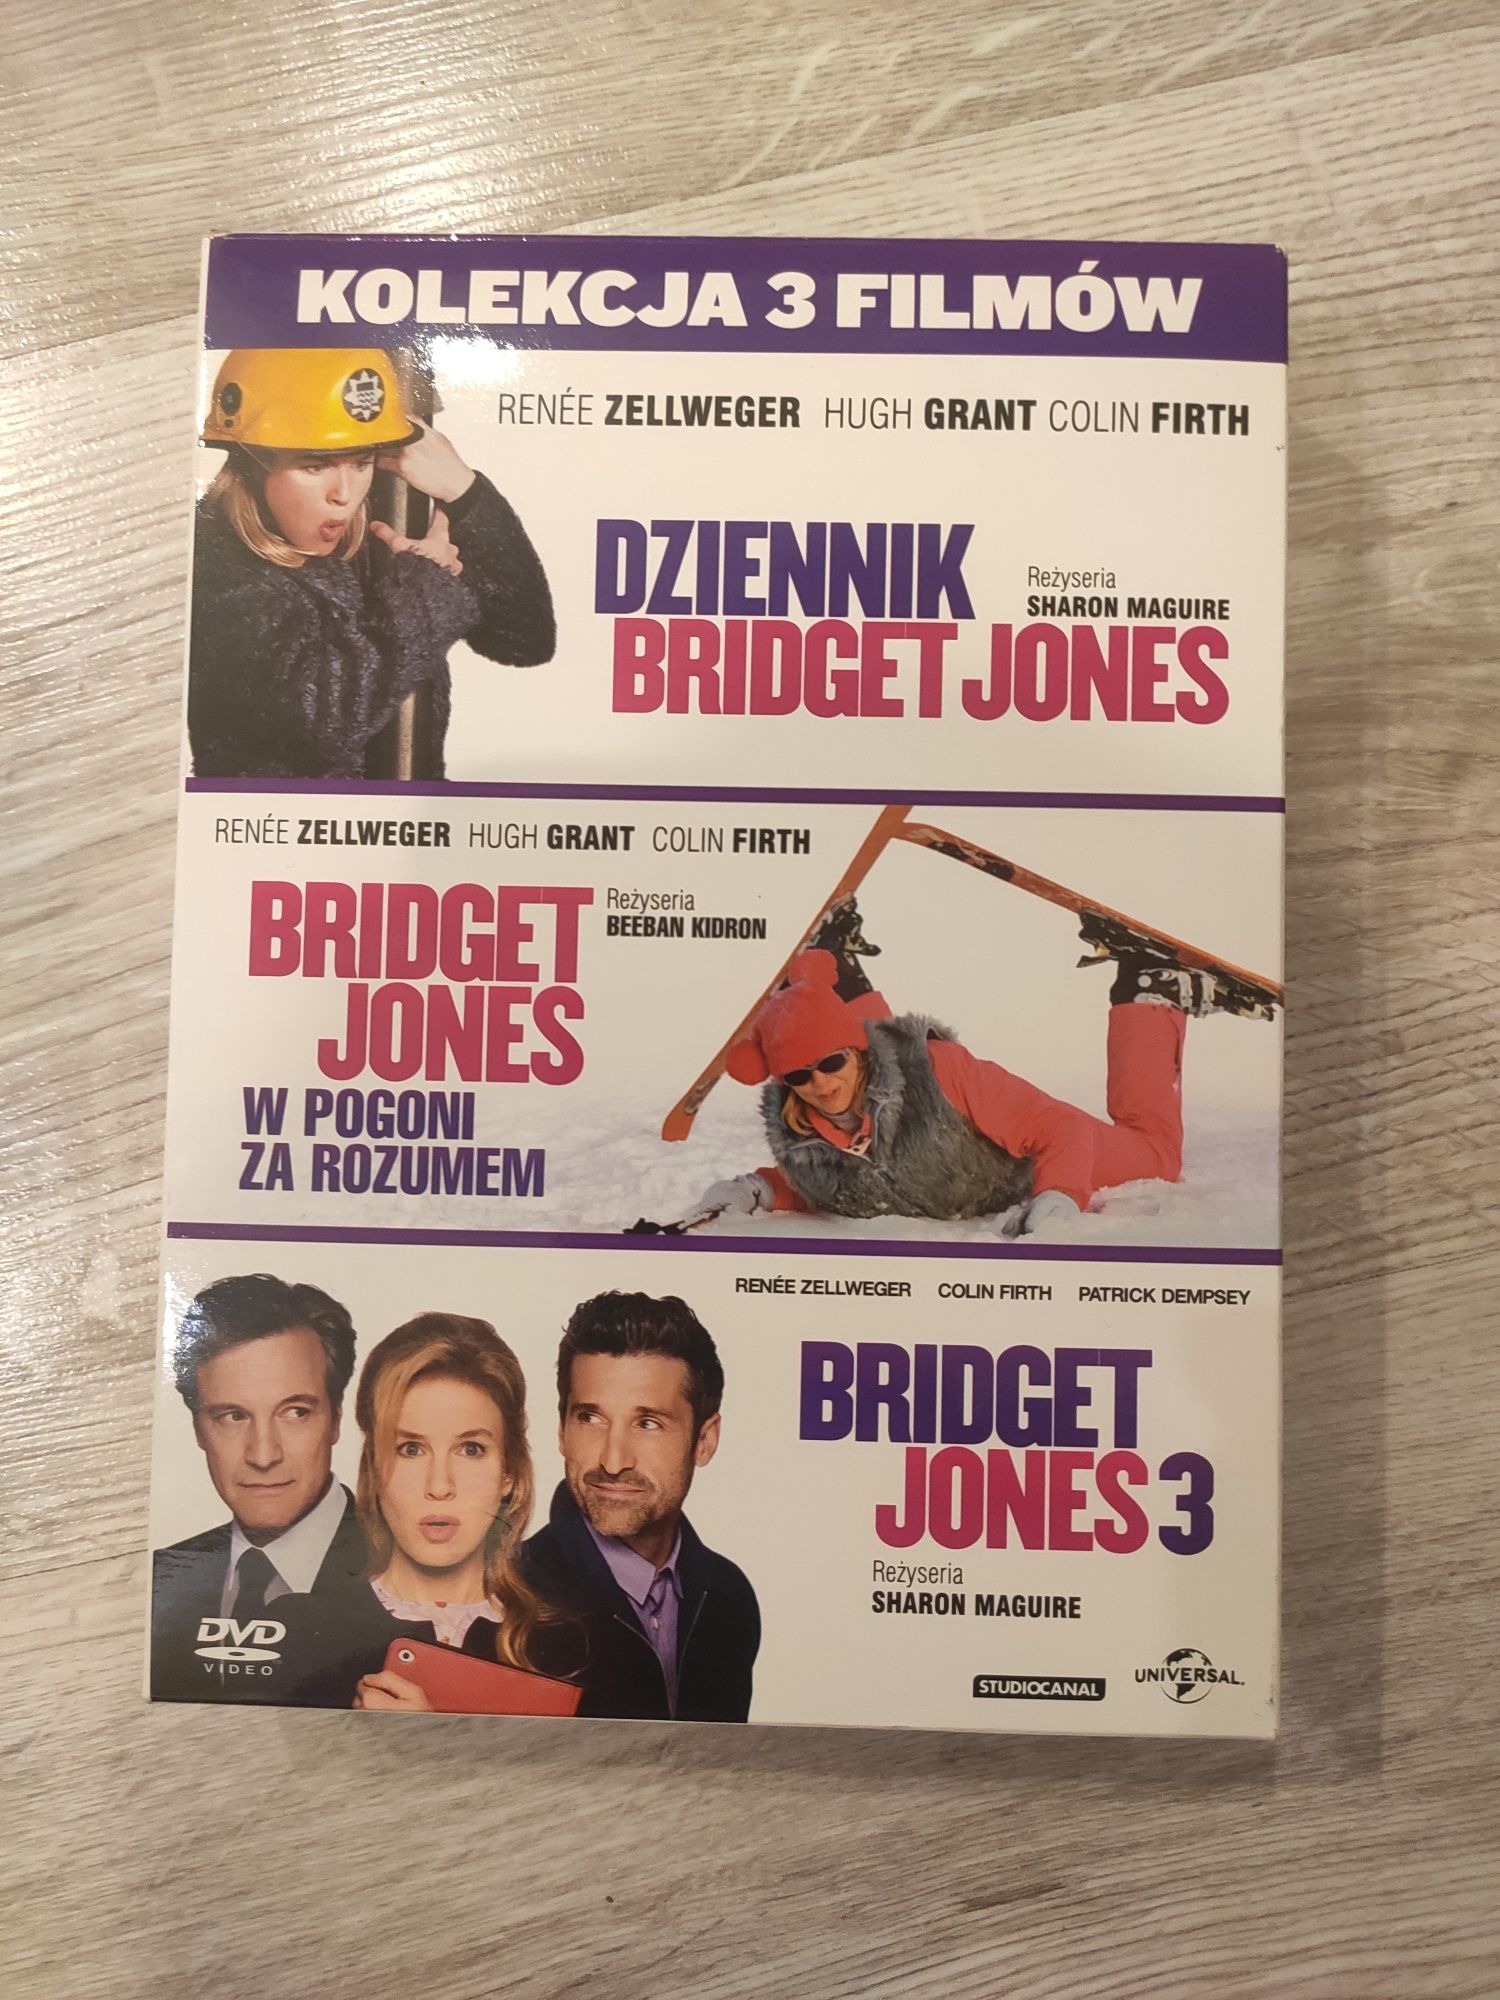 Kolekcja 3 filmów "Dziennik Bridget Jones"